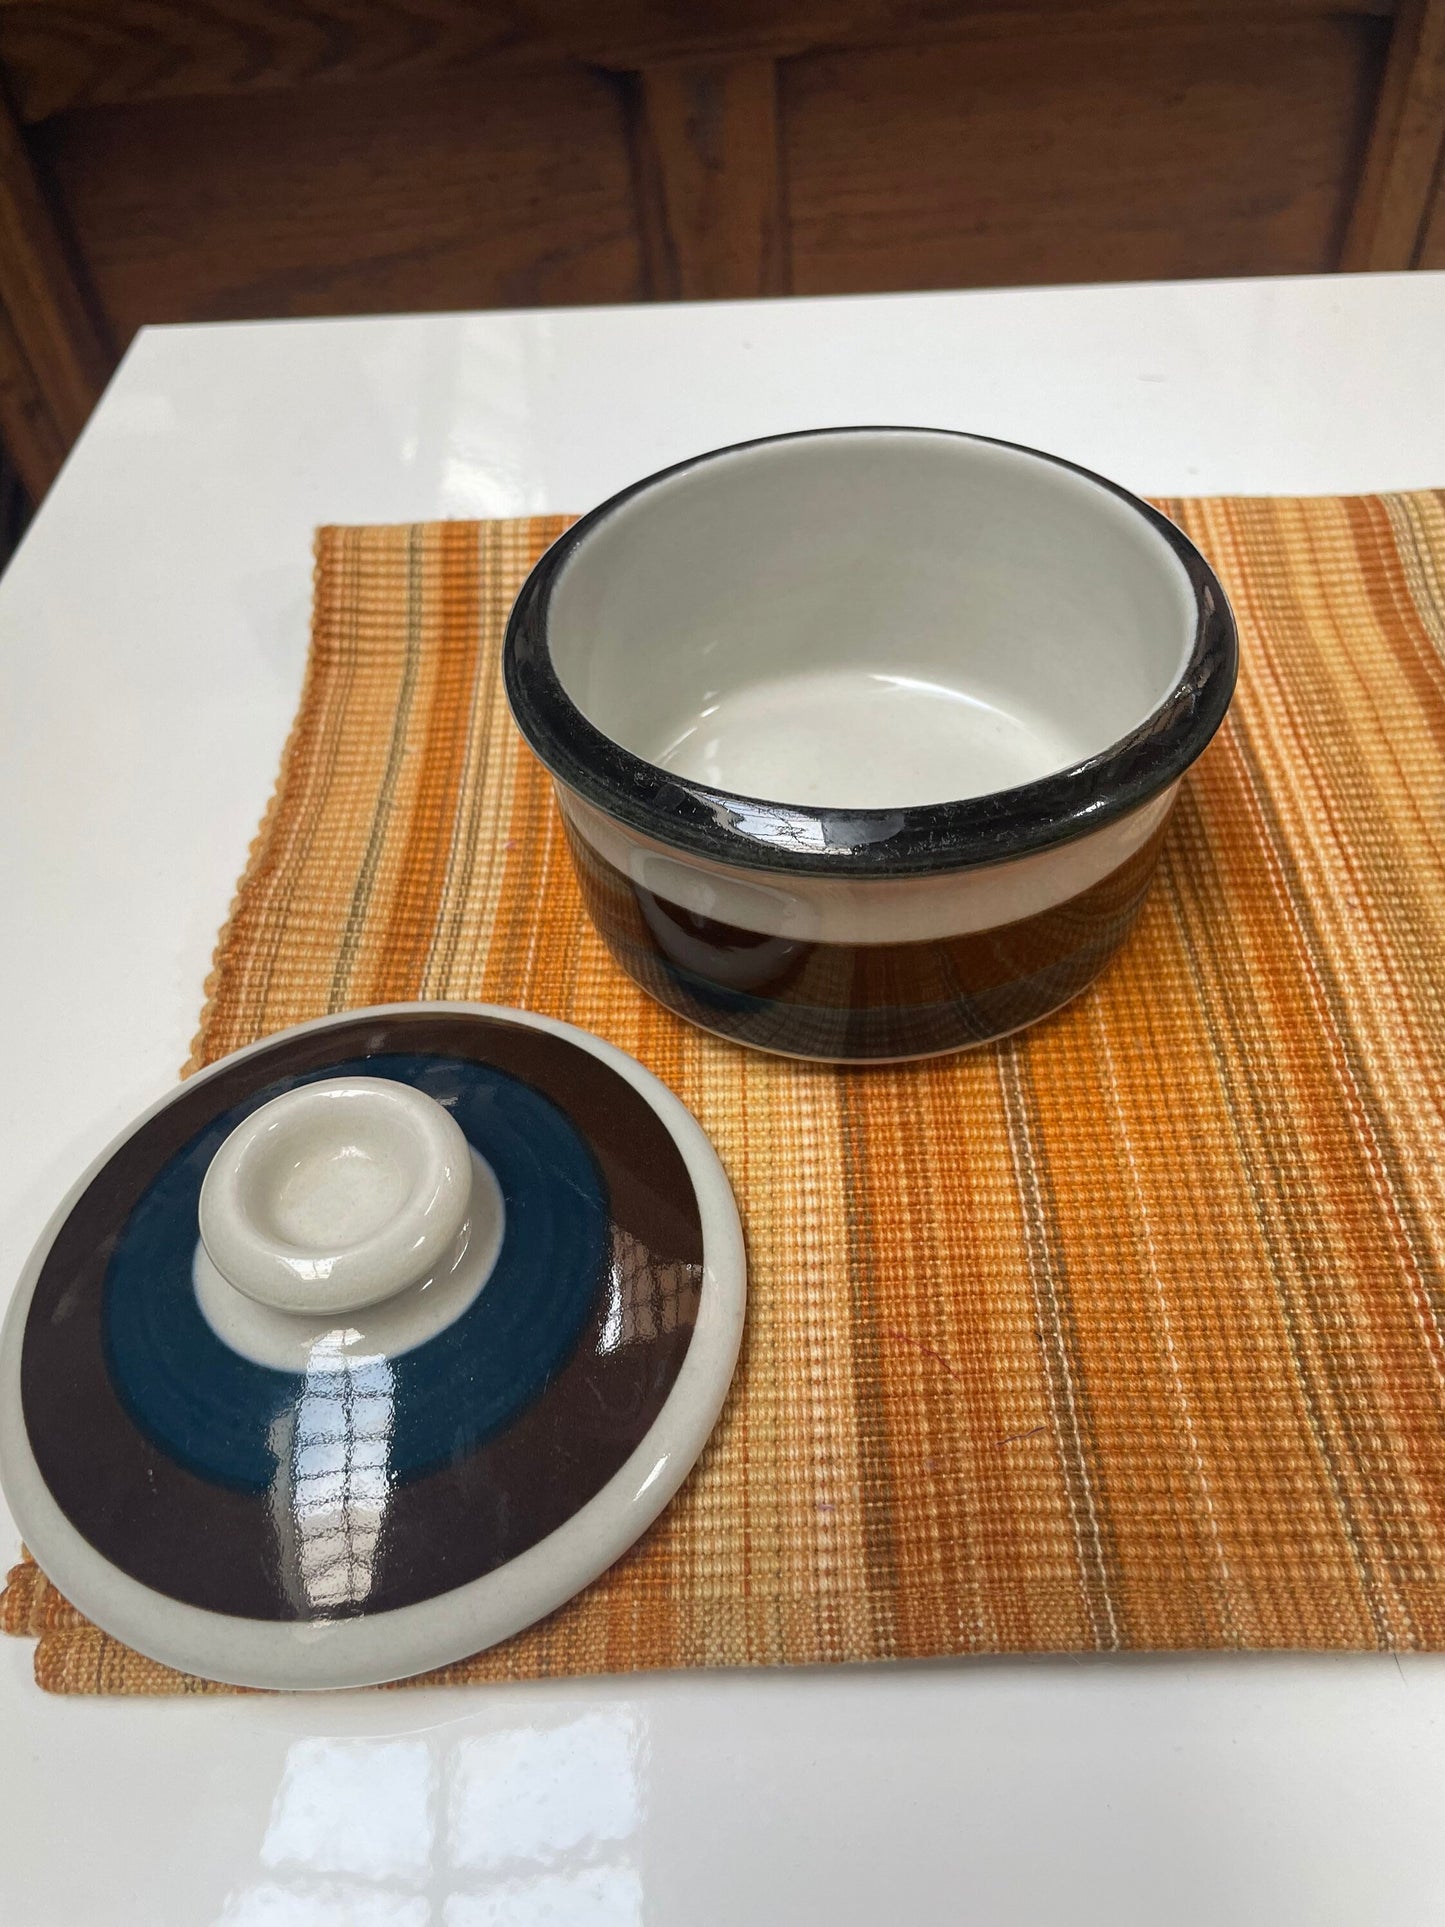 Vintage 1970s Arabia Finland Ceramic Sugar Bowl and Cream Set Named “Kaira” by Anna Jastinen-Winquist